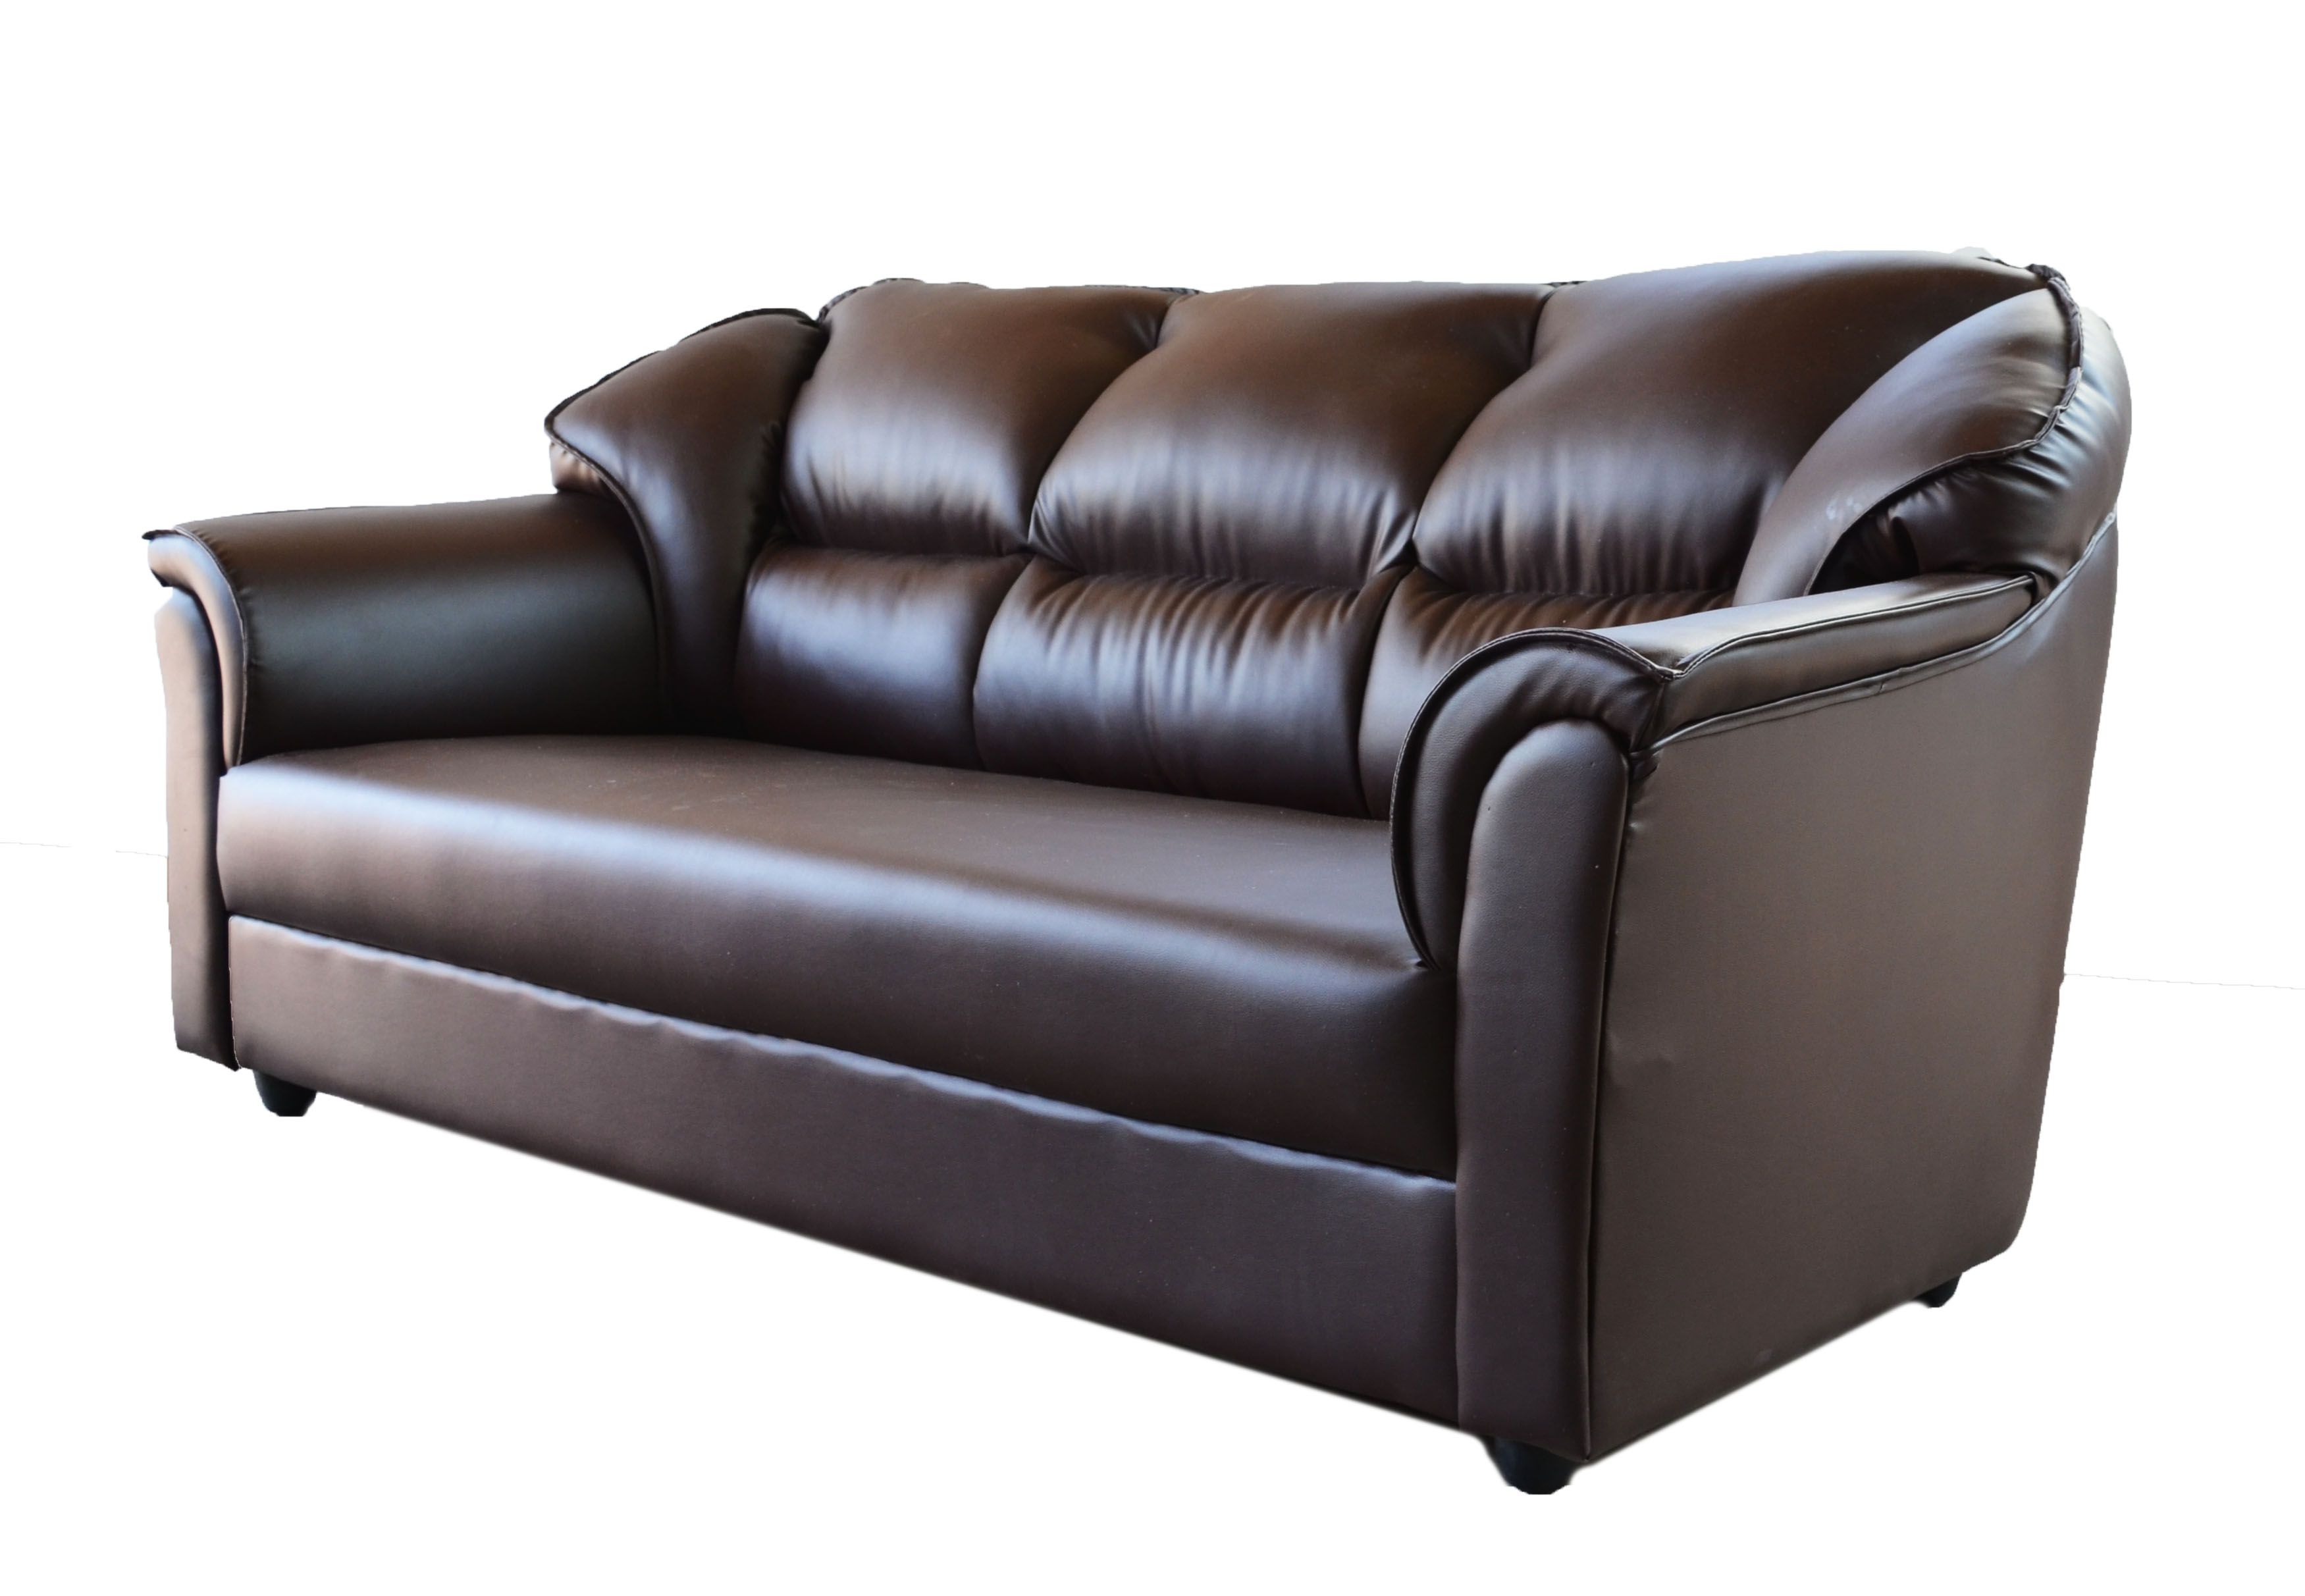 Westido Manhattan Brown 3 1 1 Seater Sofa Set Buy Westido